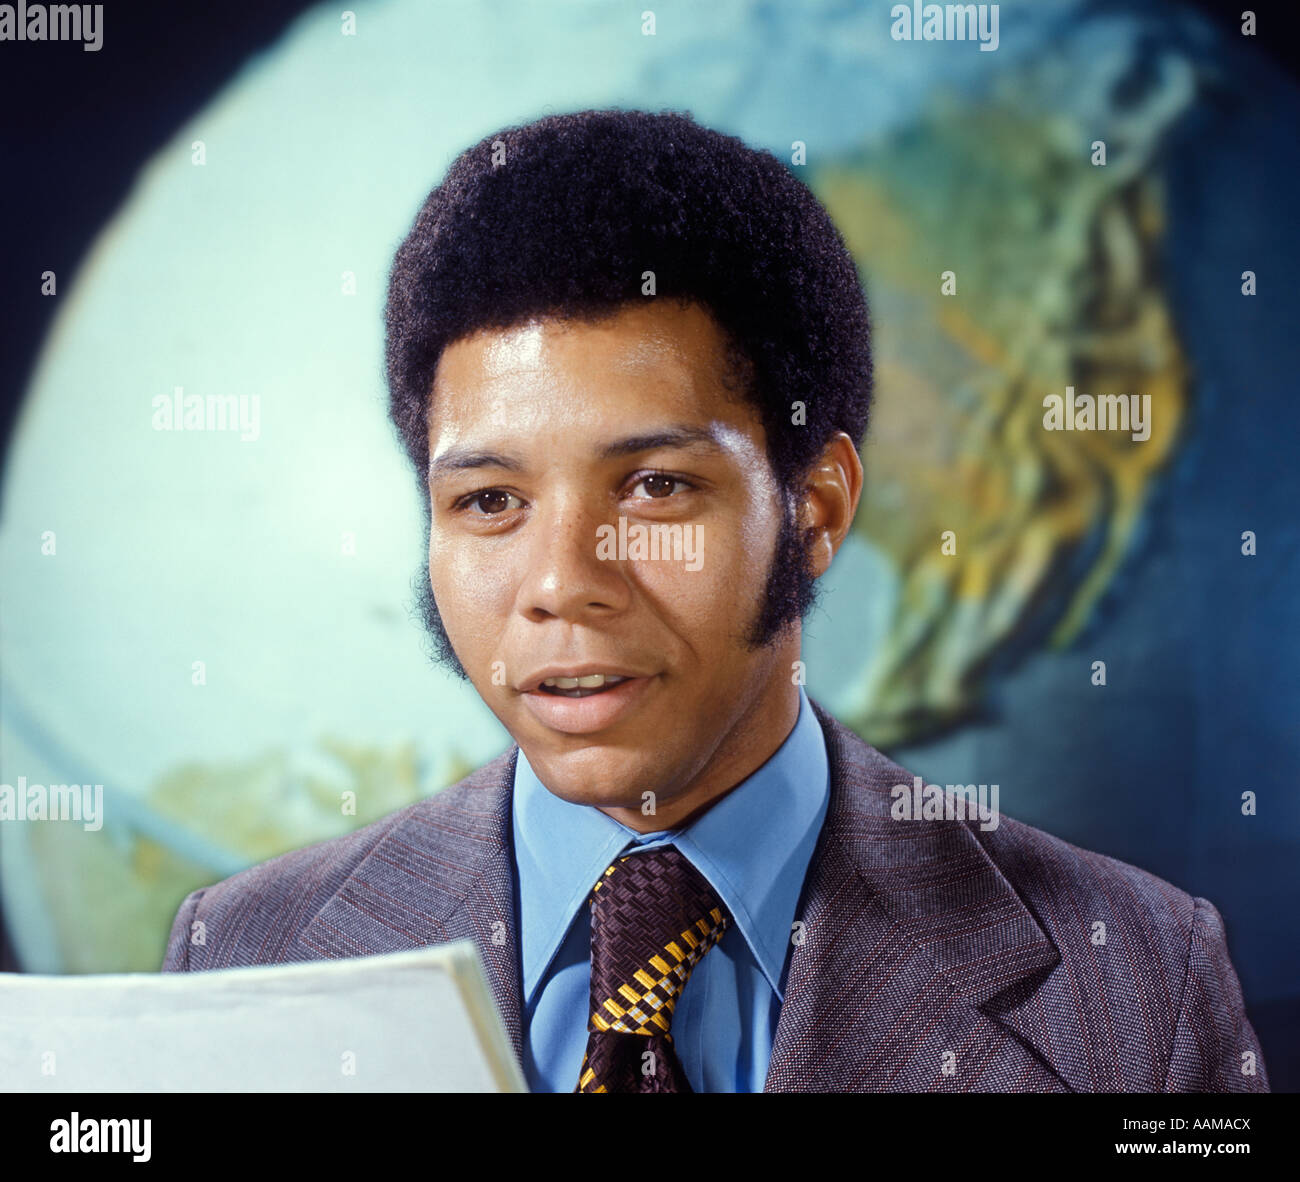 MAN NEWSCASTER REPORTER TV TELEVISION ANCHORMAN CORRESPONDENT NEWS 1970 1970s RETRO Stock Photo